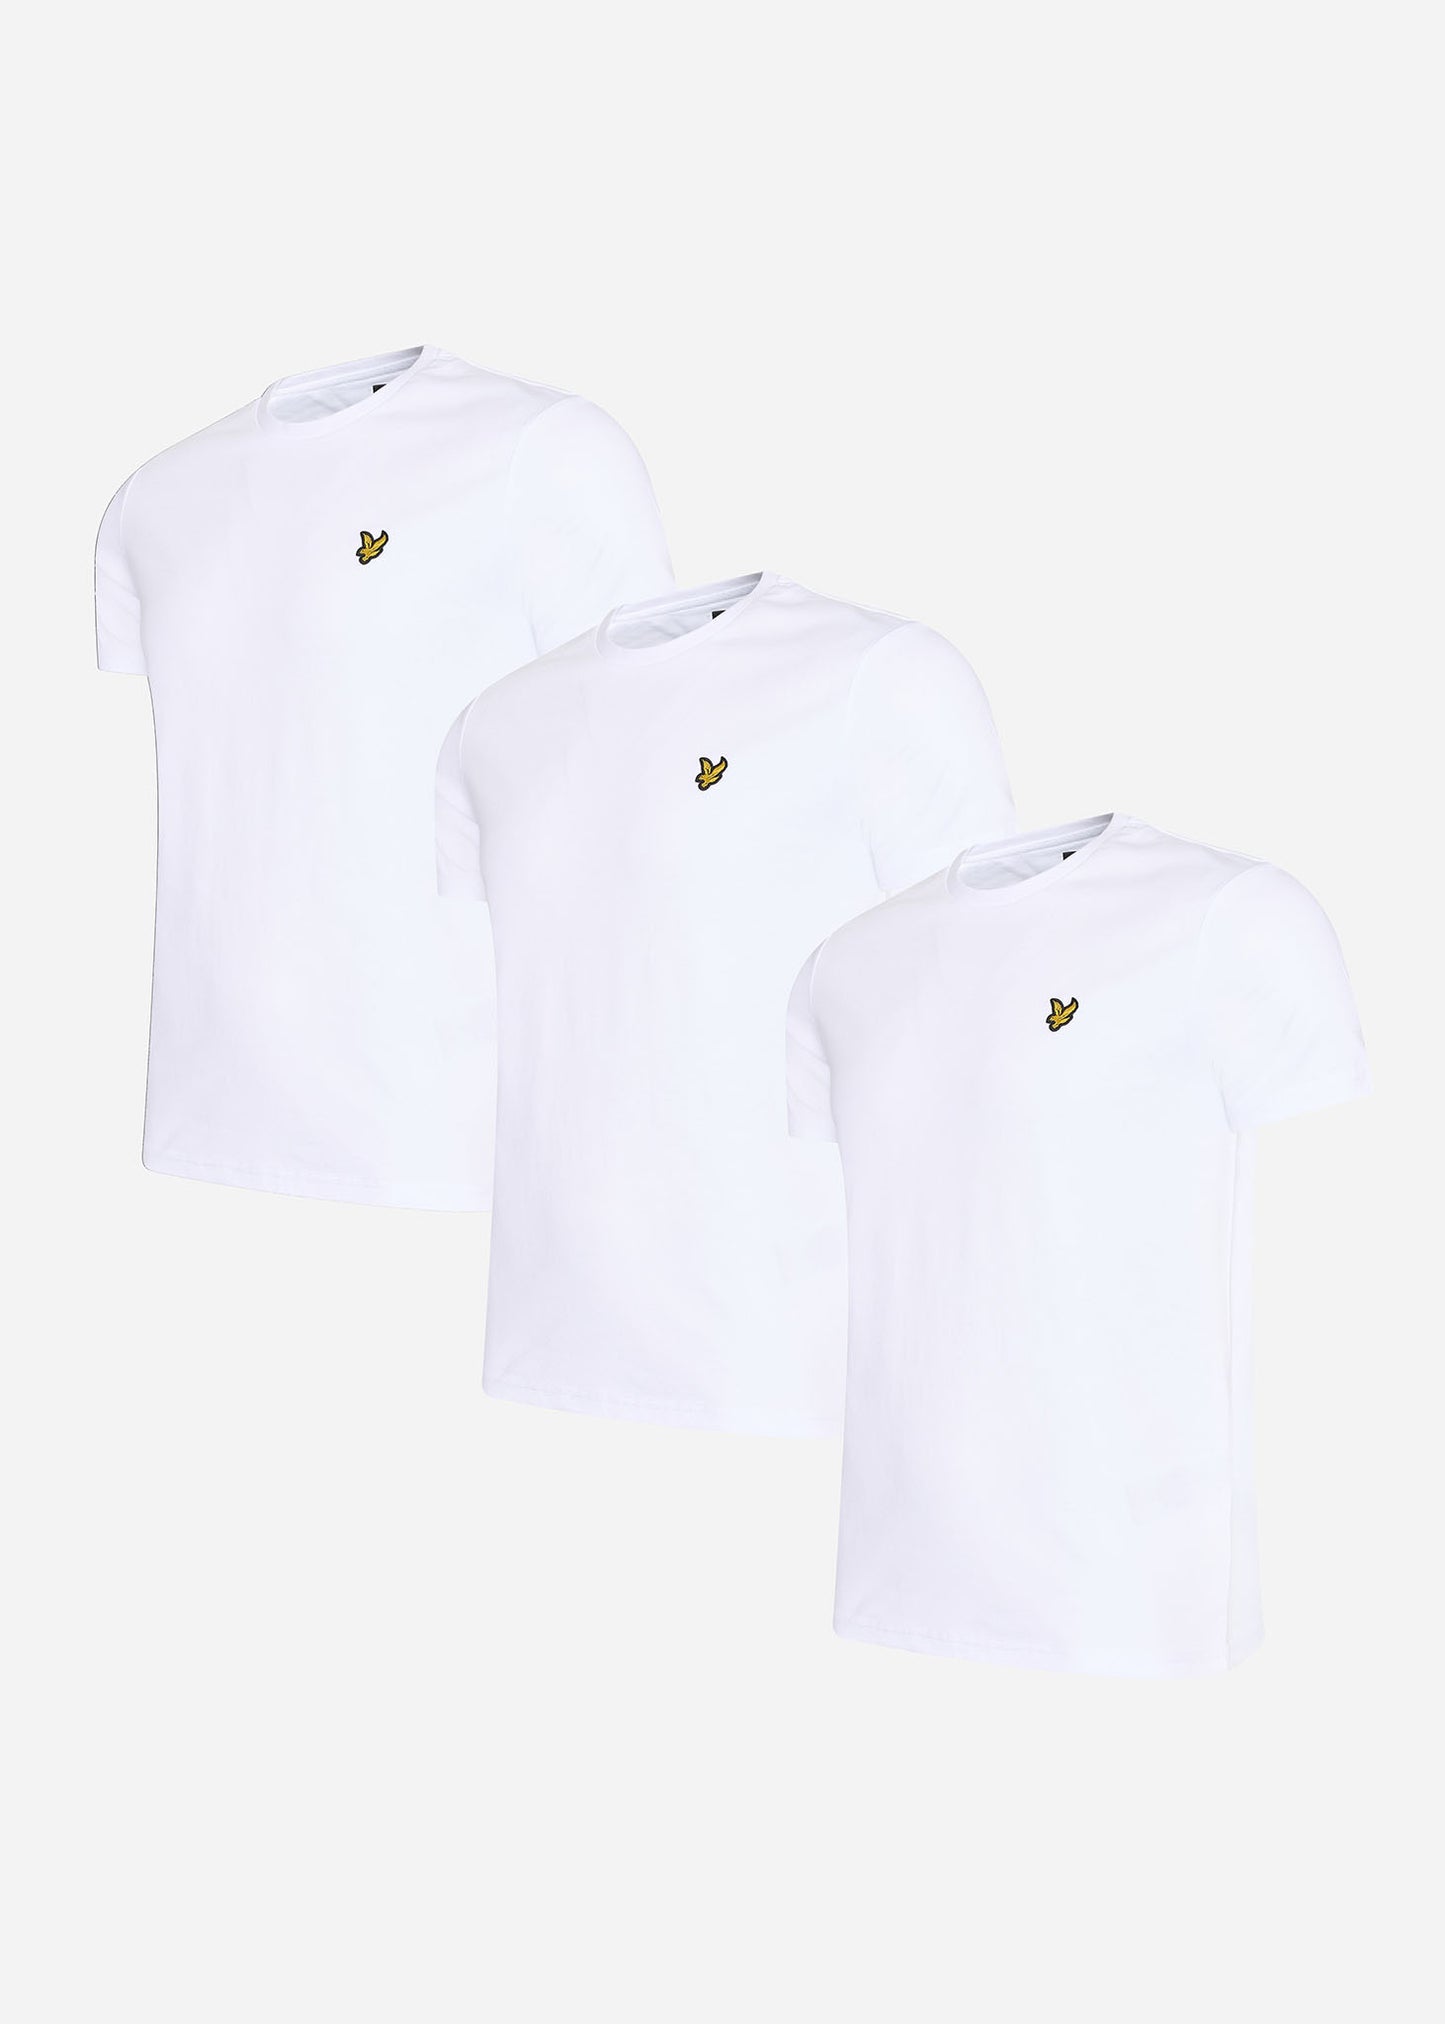 Plain t-shirt - white 3 pack